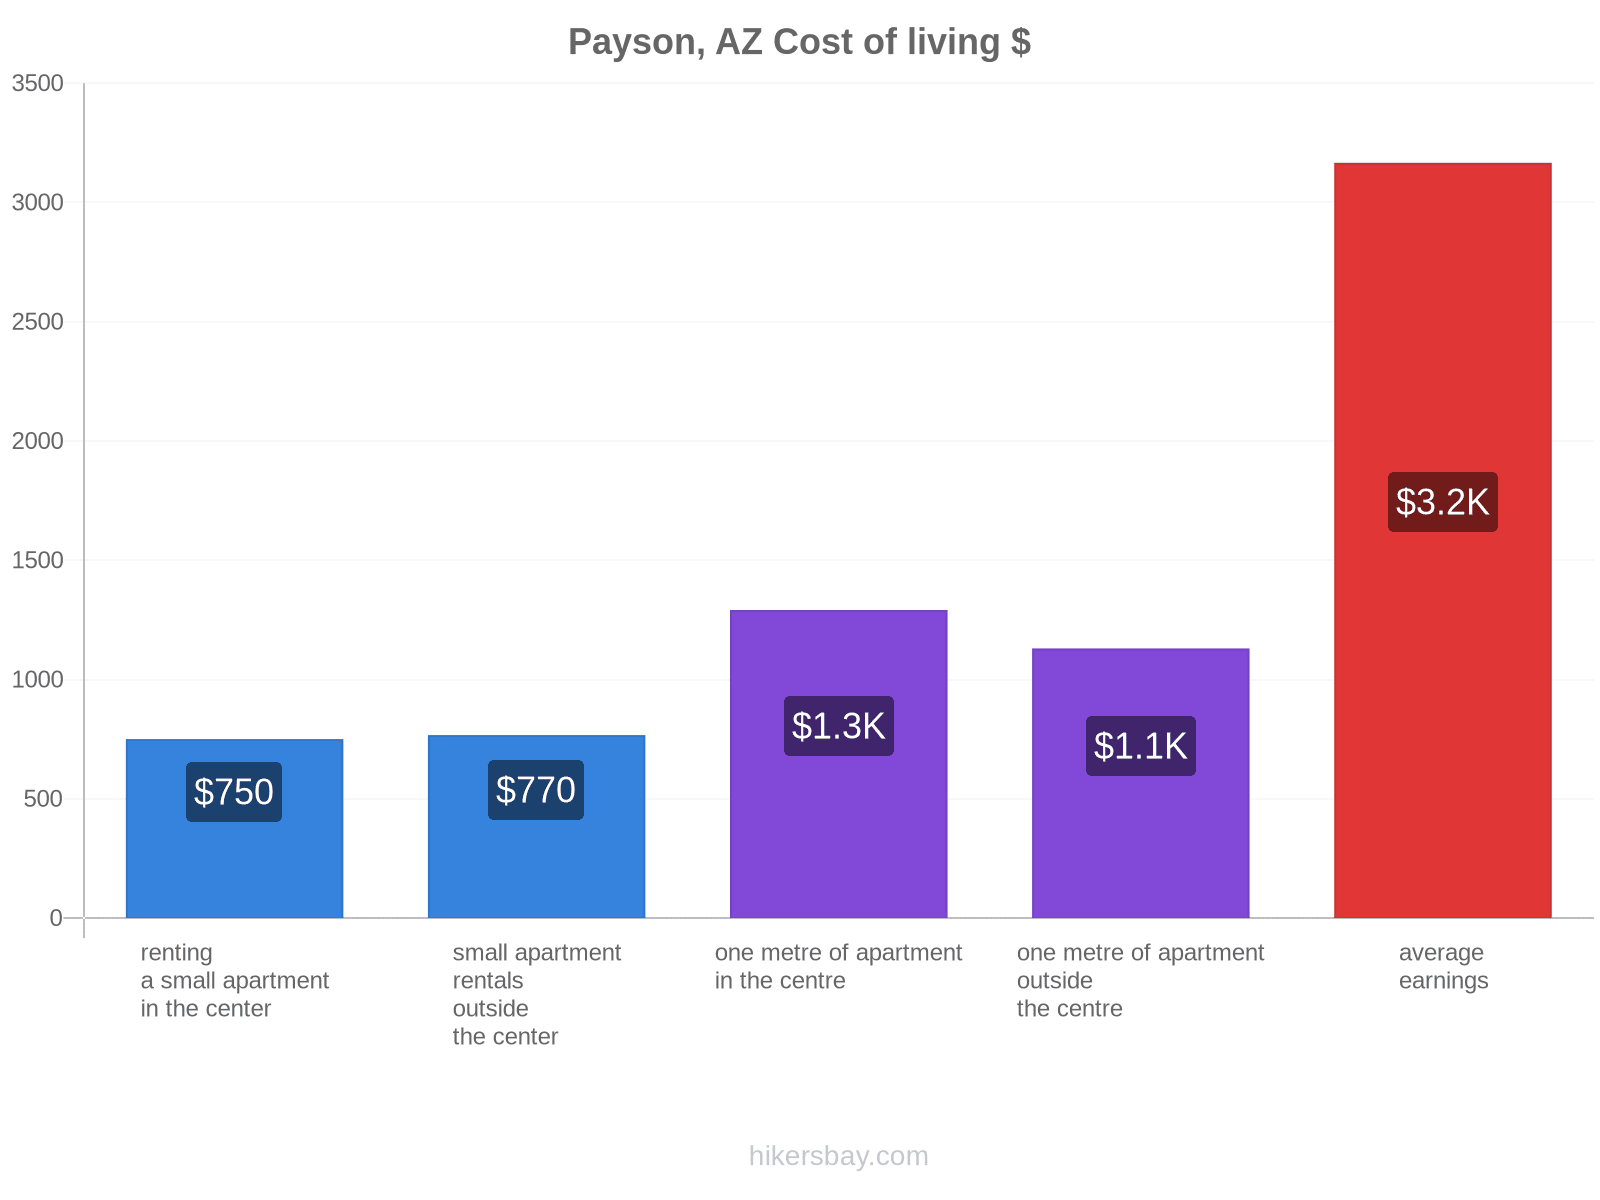 Payson, AZ cost of living hikersbay.com